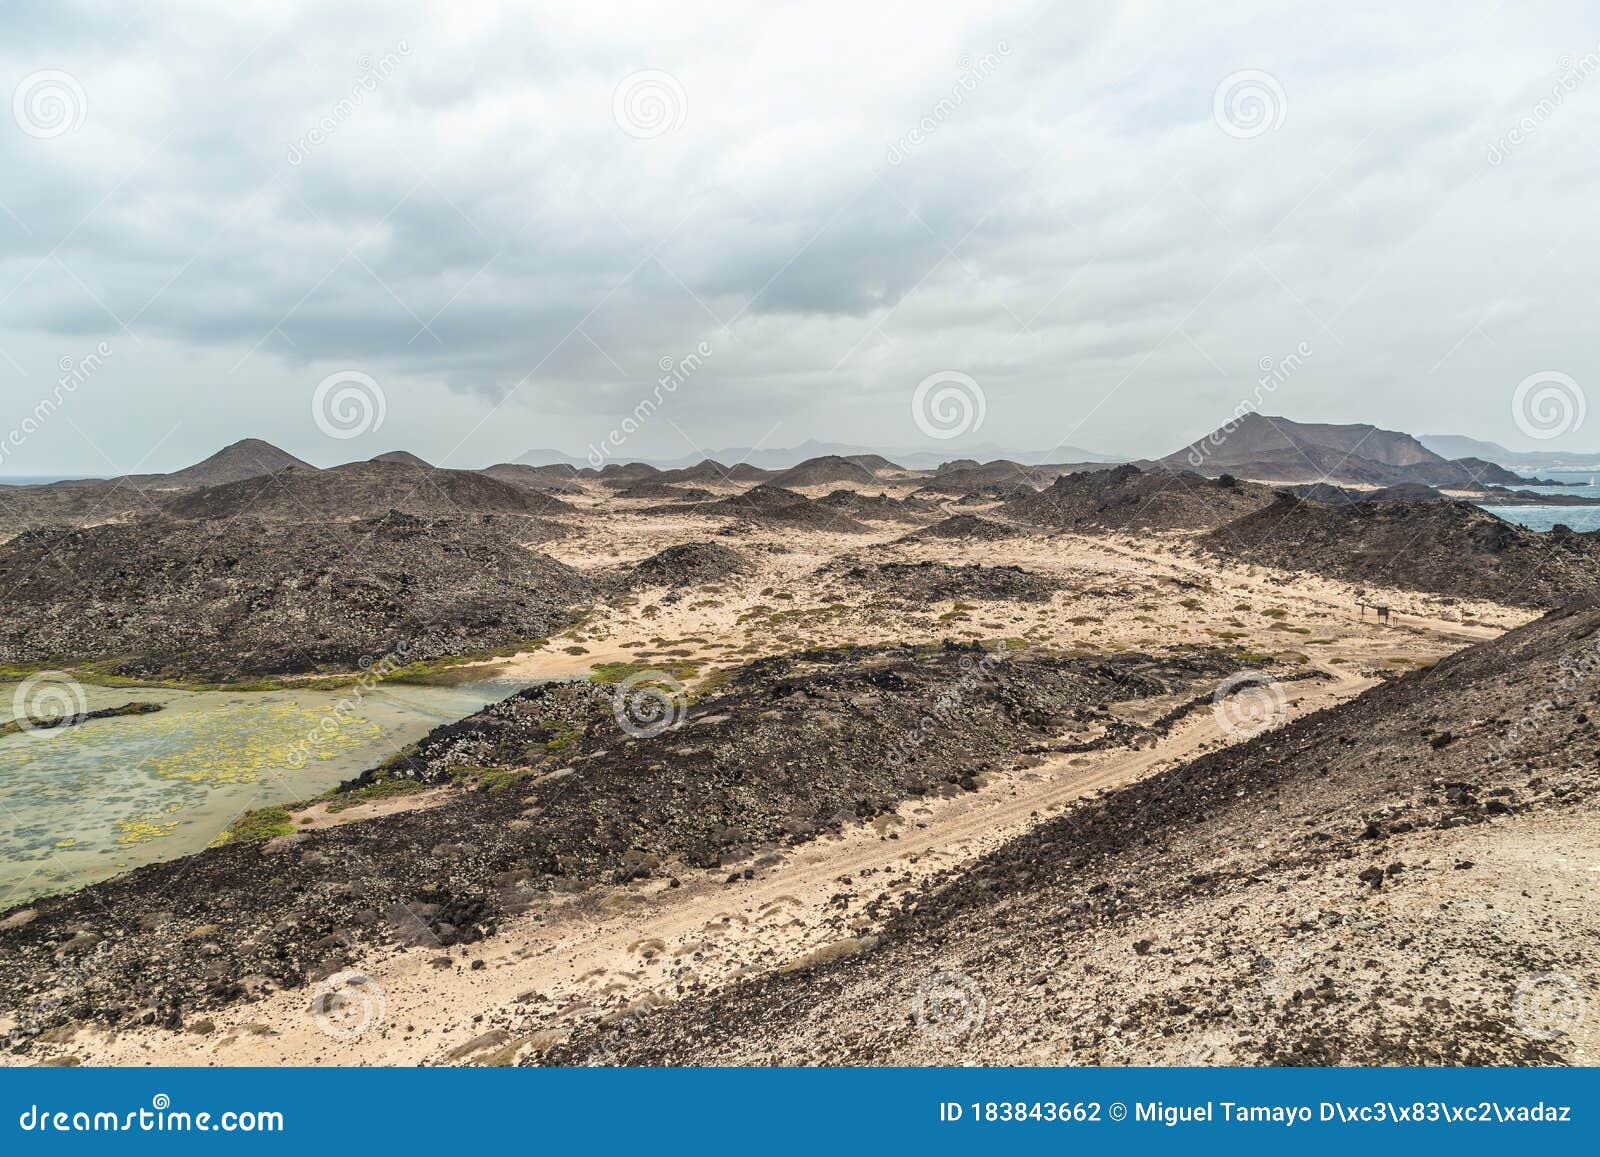 view of volcanic landscape of isla de lobos in fuerteventura, canary islands, spain